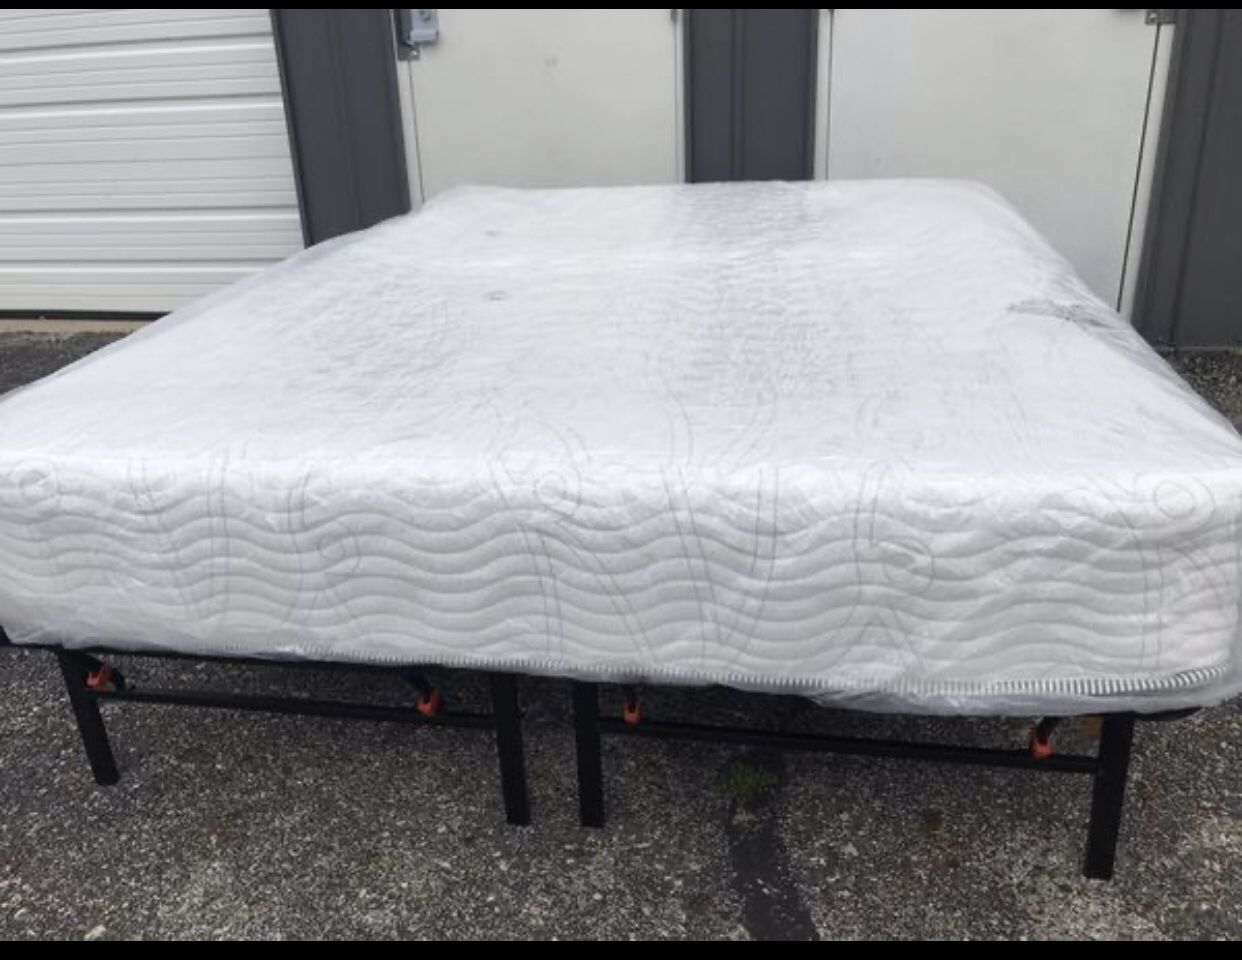 New KING size gel memory foam hybrid mattress and platform bed frame